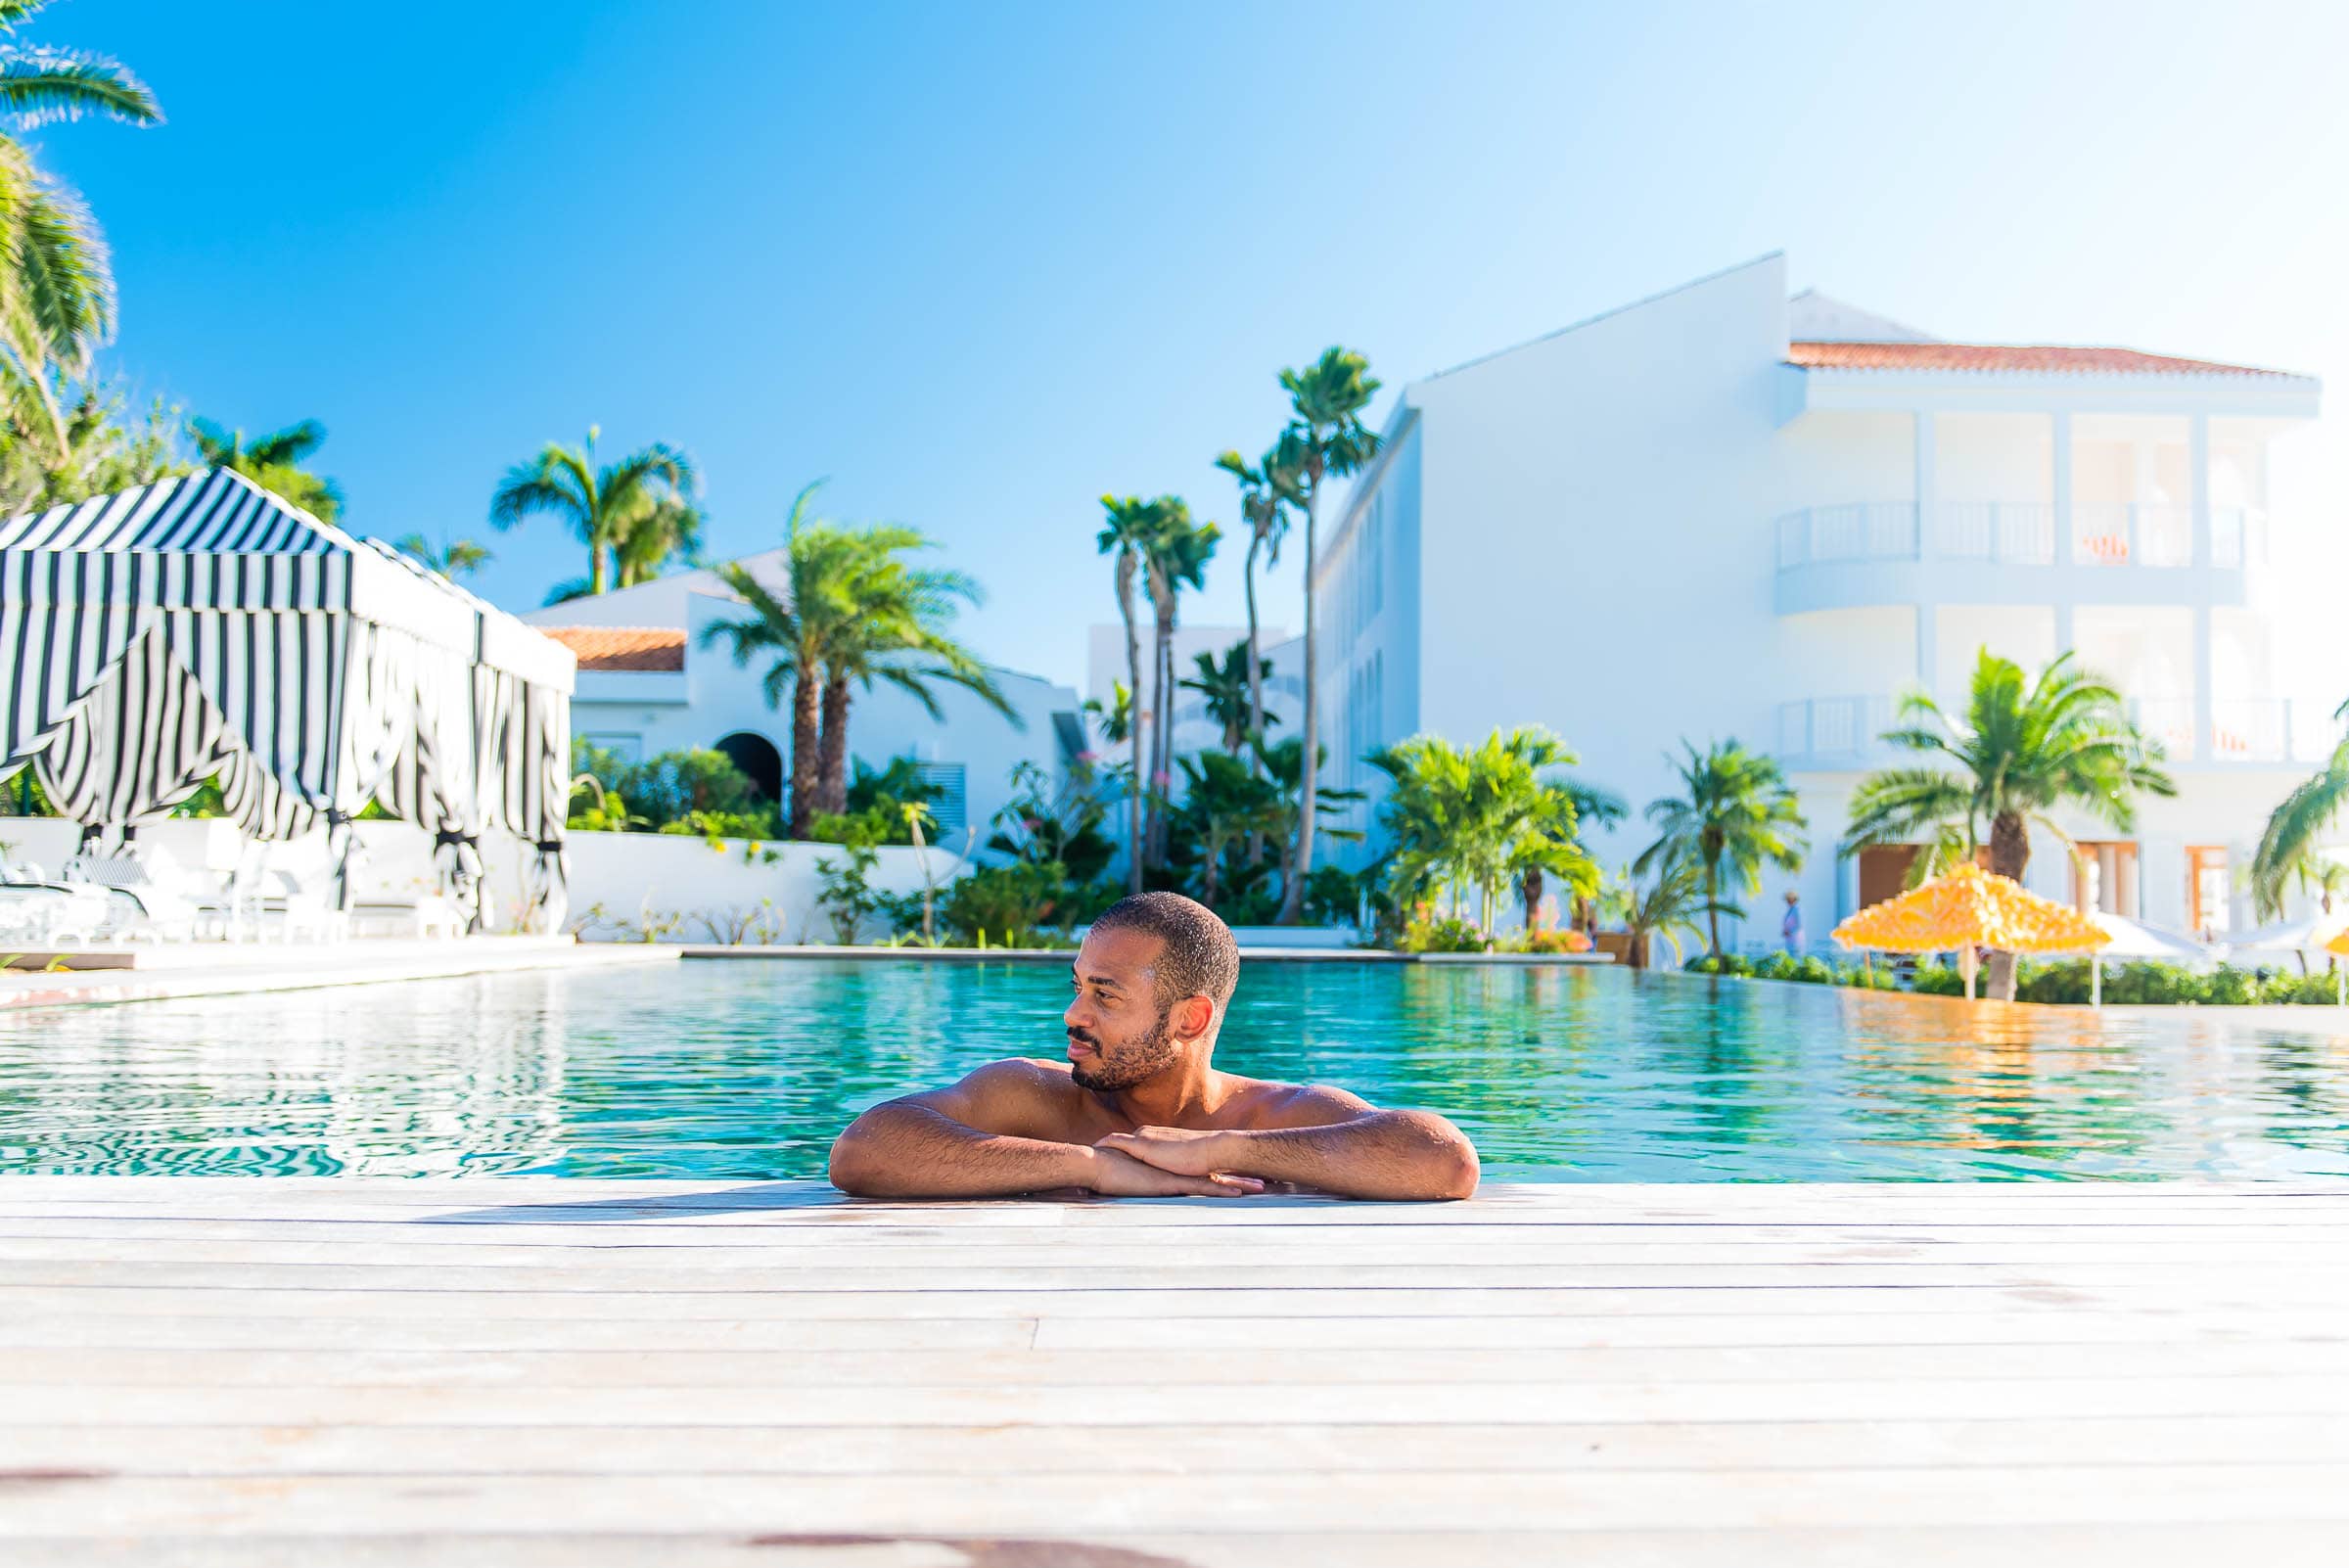 Malliouhana Luxury Resort Anguilla - Pool by Patrick Bennett